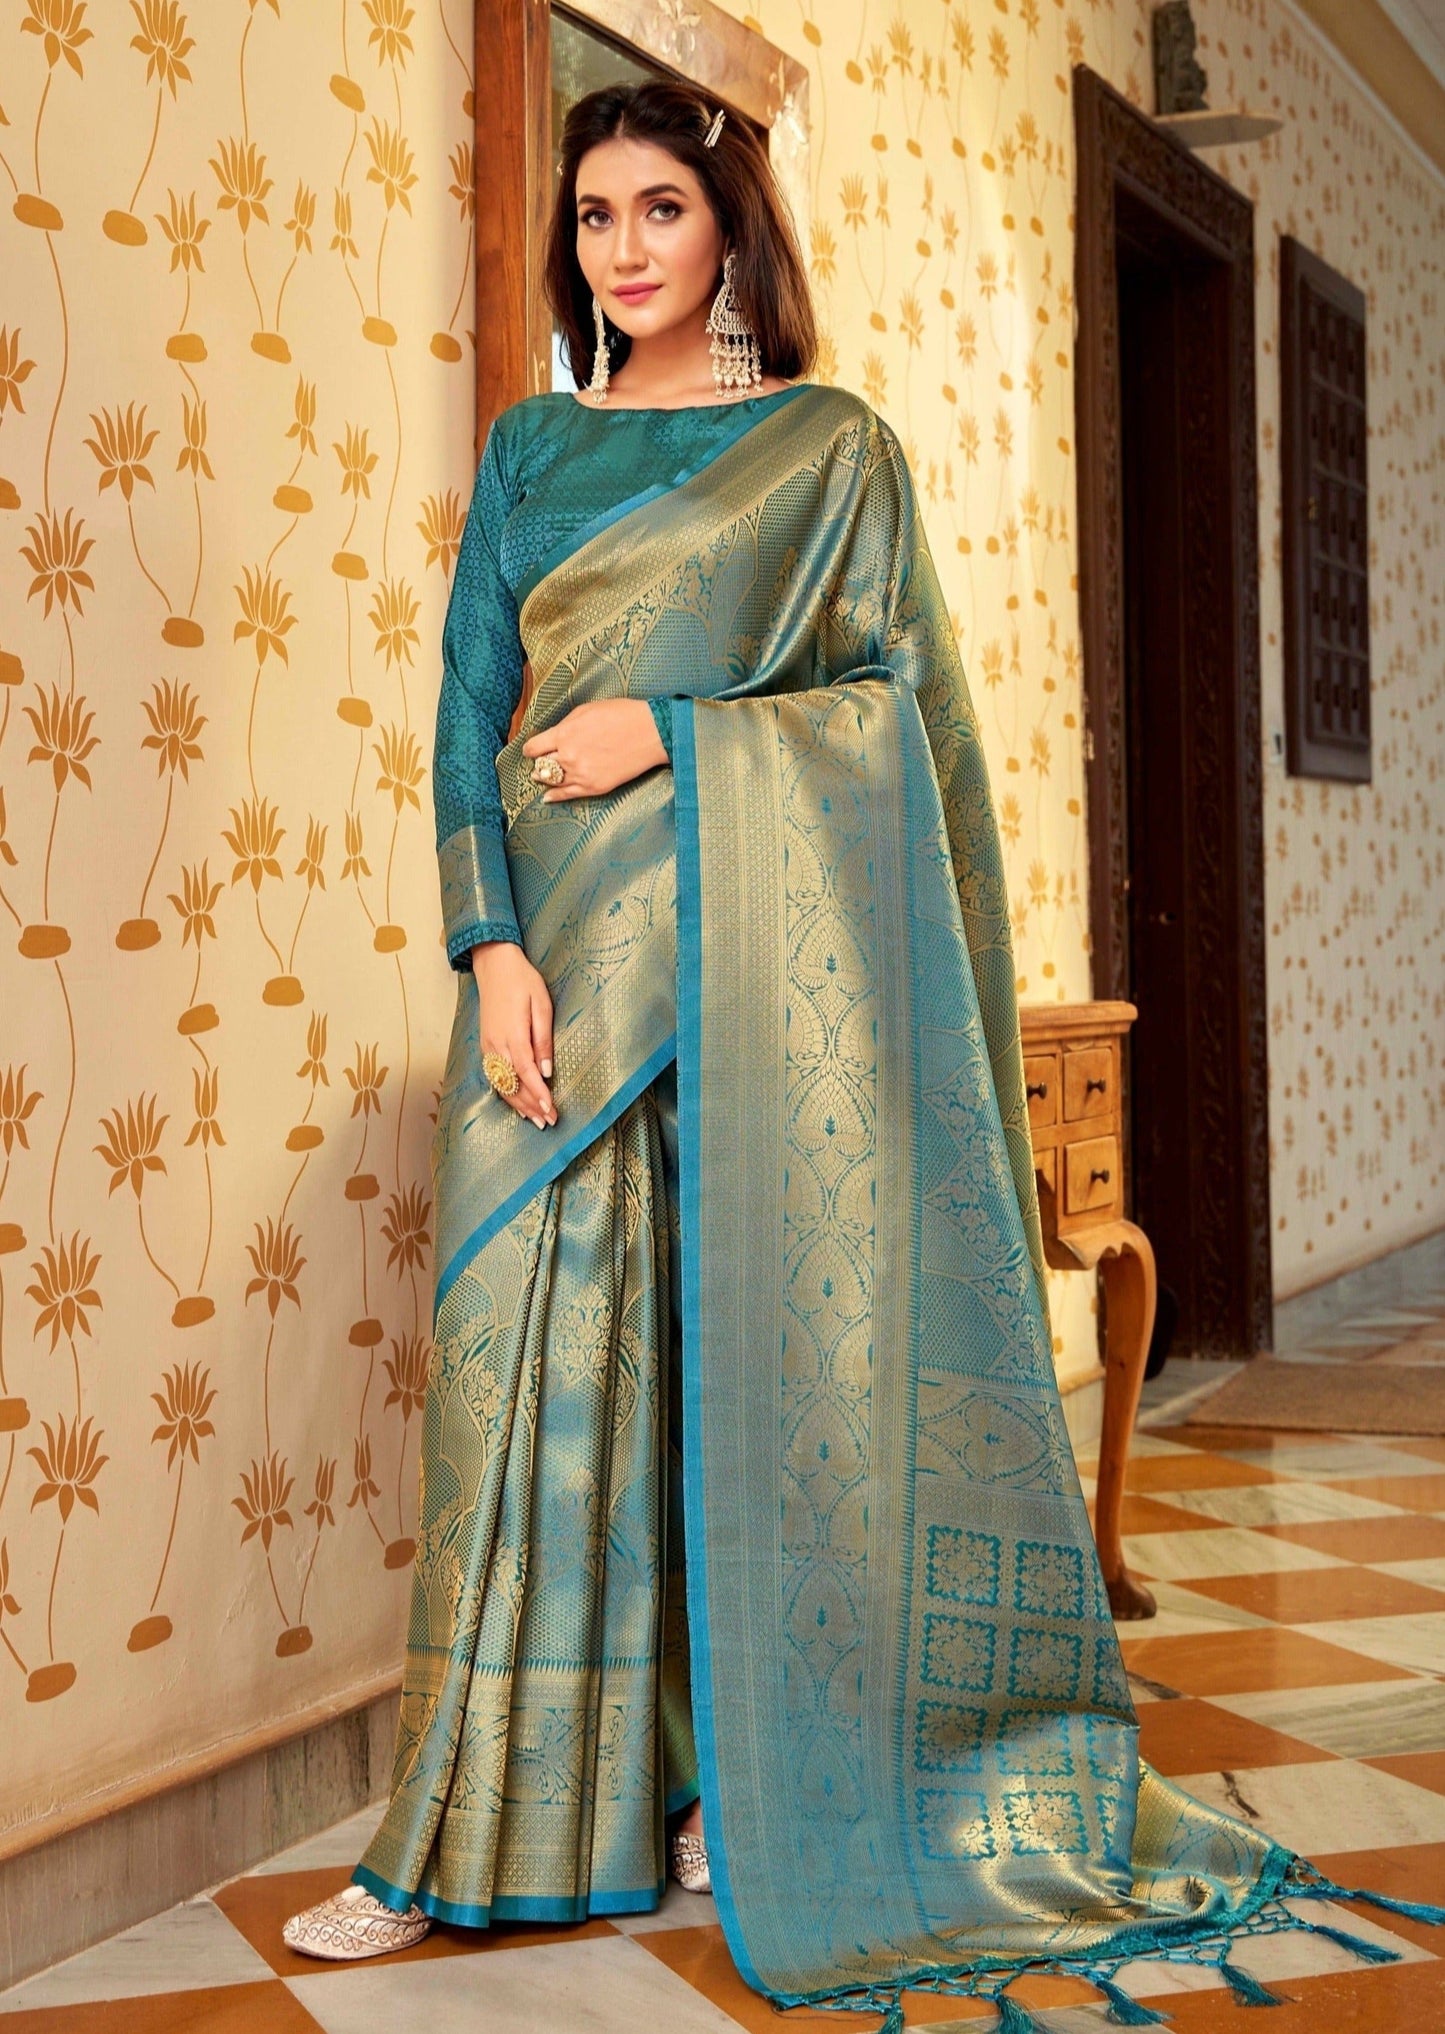 Handloom kanjivaram silk turquoise blue sarees online.